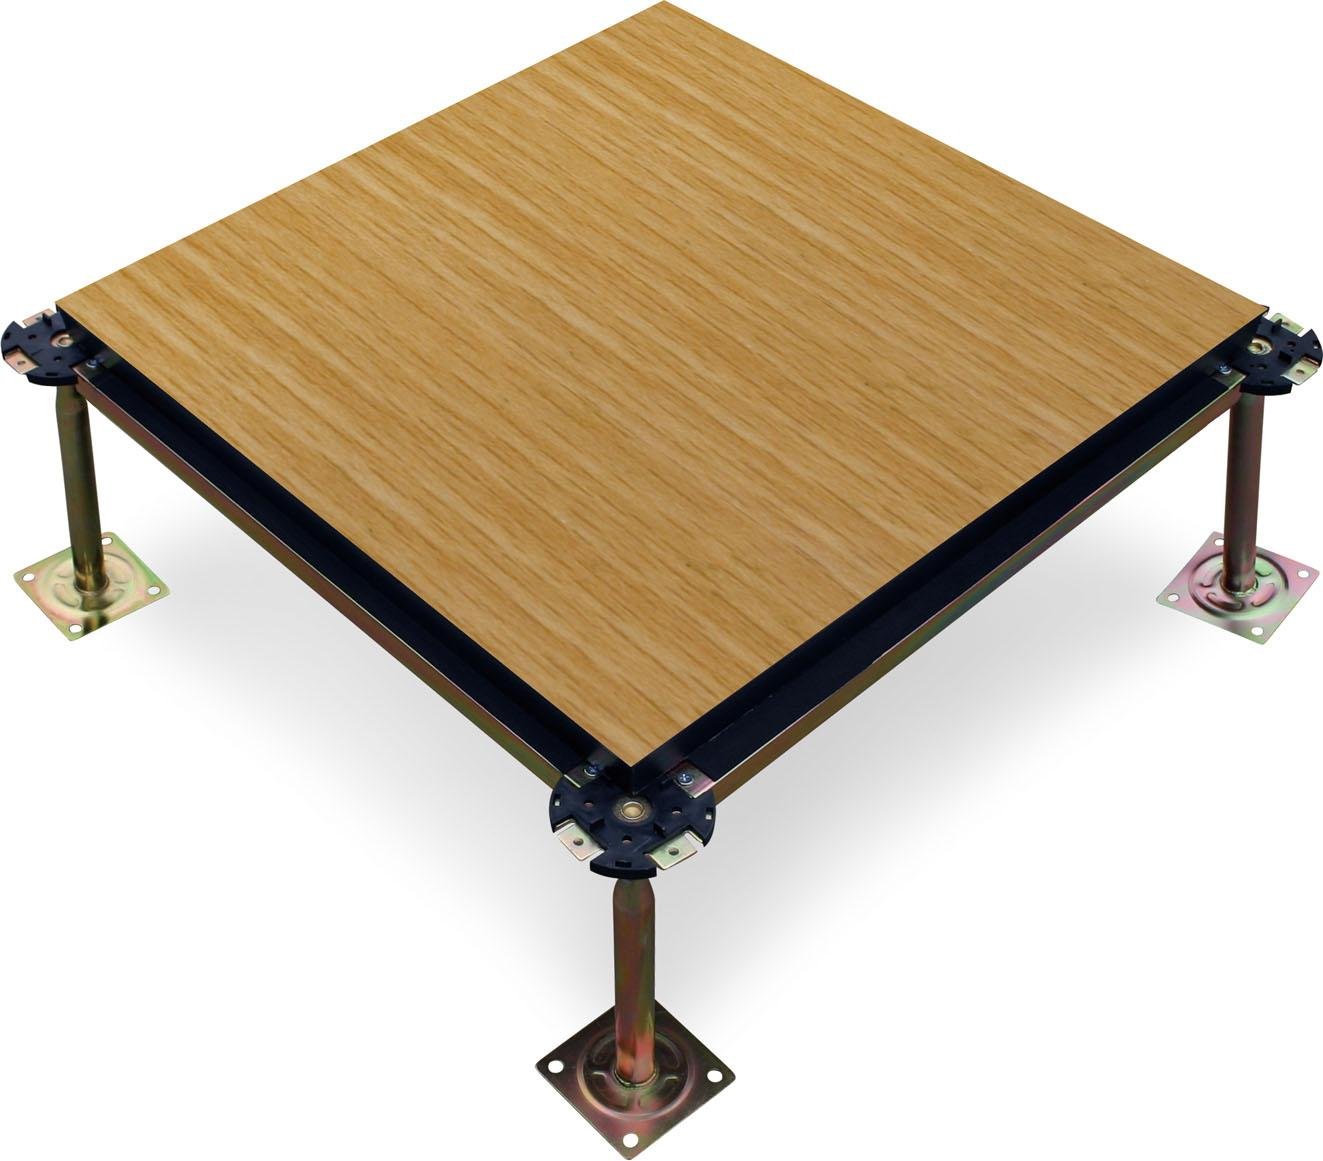 Resflor Wood Core Raised Access Floor 1